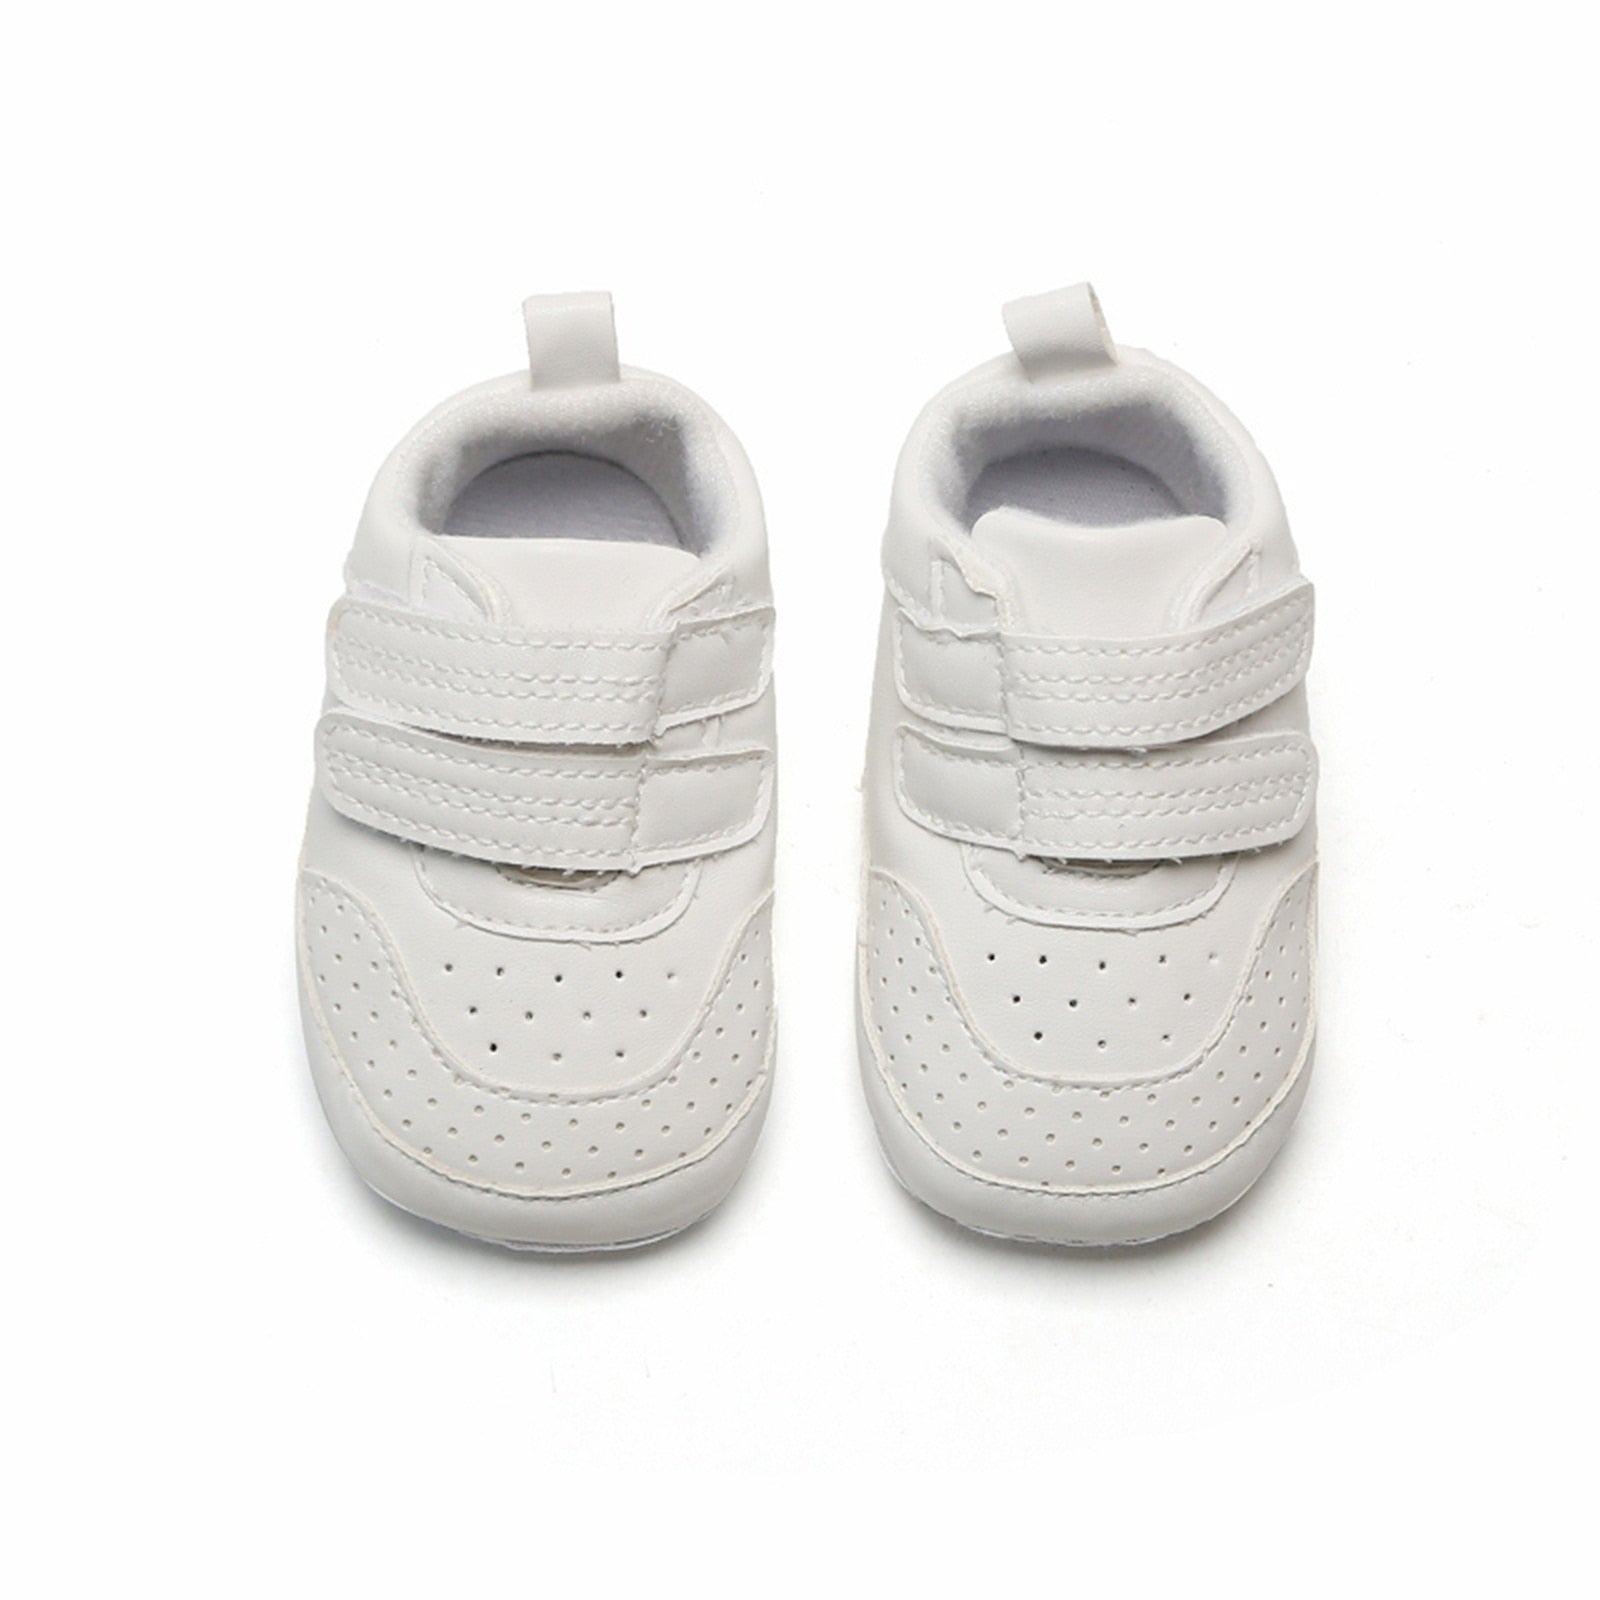 Sapatênis Branco Clássico Sapato Loja Click Certo Dois Fechos 0-6 Meses 11cm 